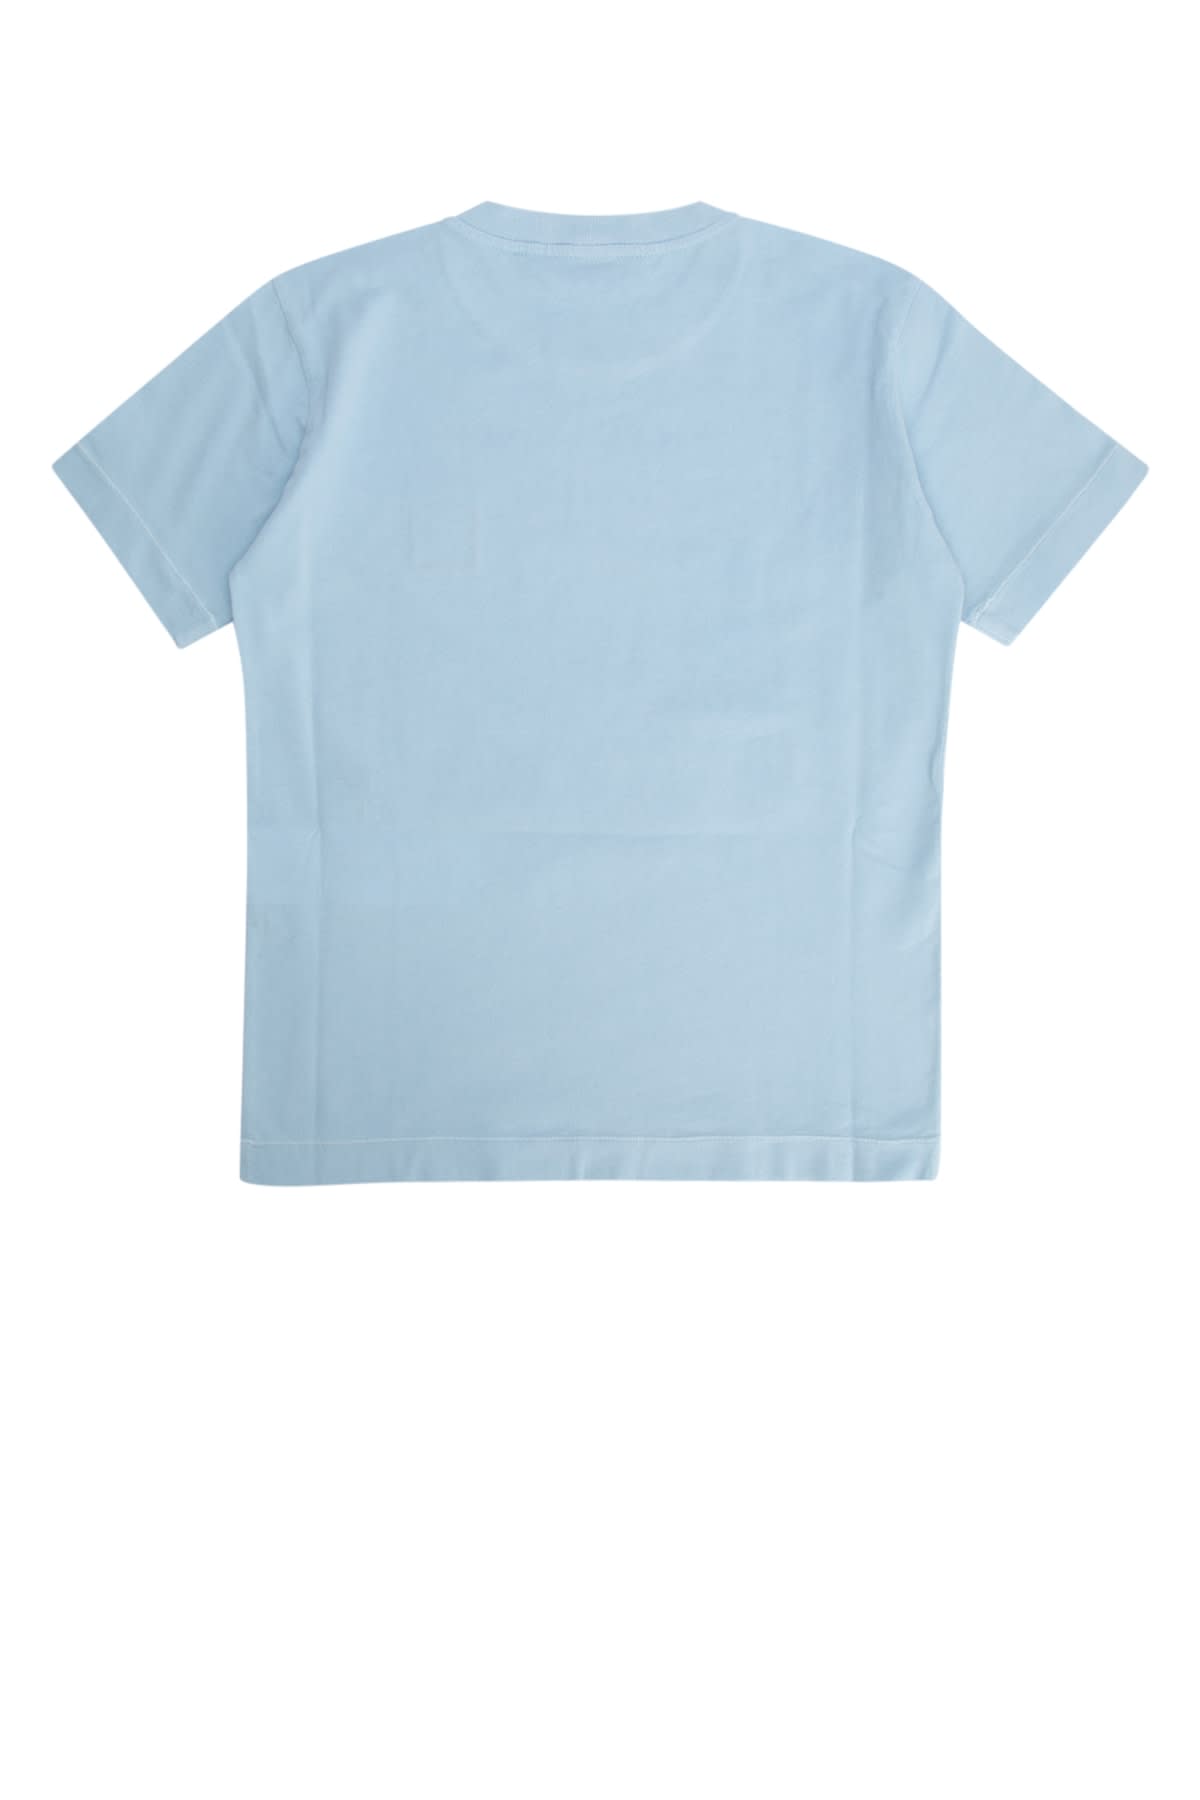 Stone Island Junior Kids' T-shirt In Blue